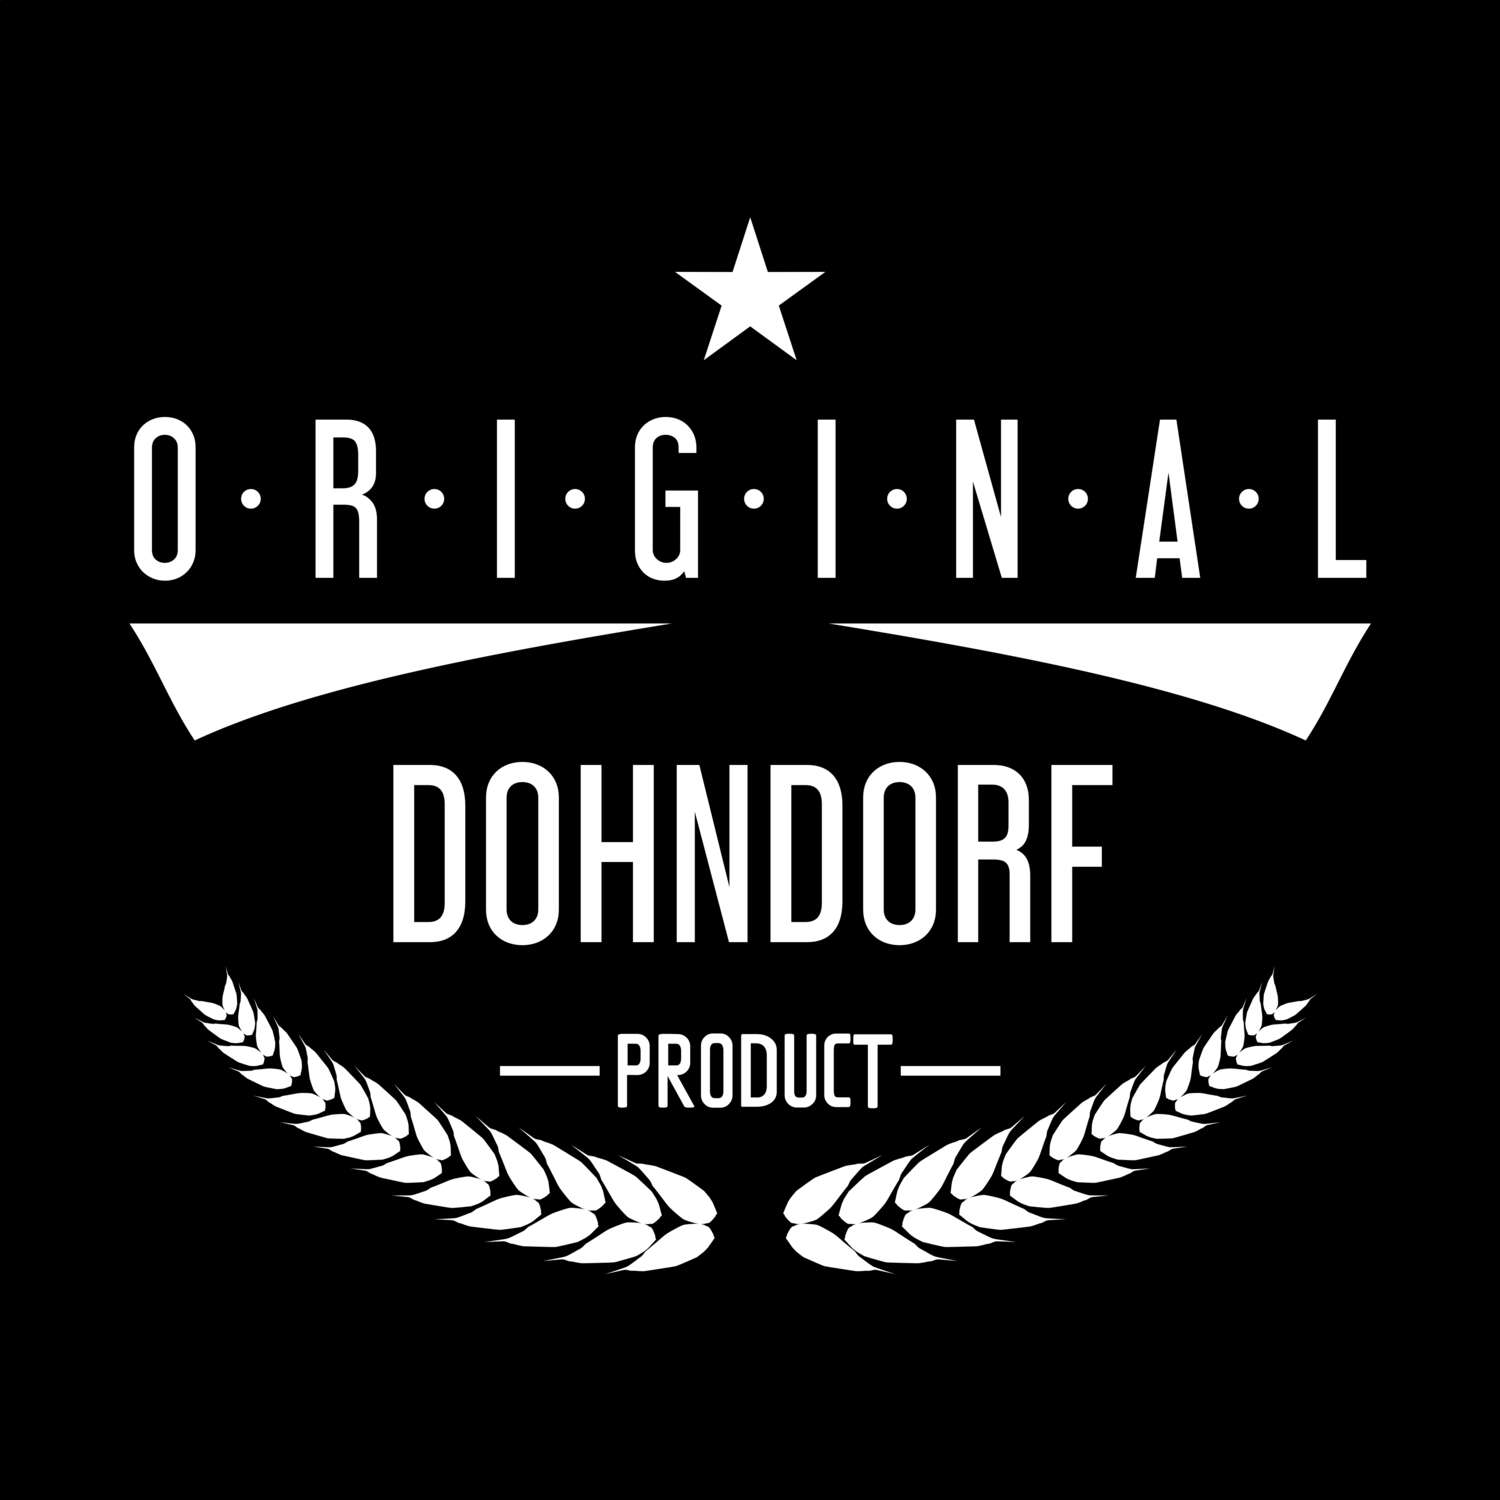 Dohndorf T-Shirt »Original Product«